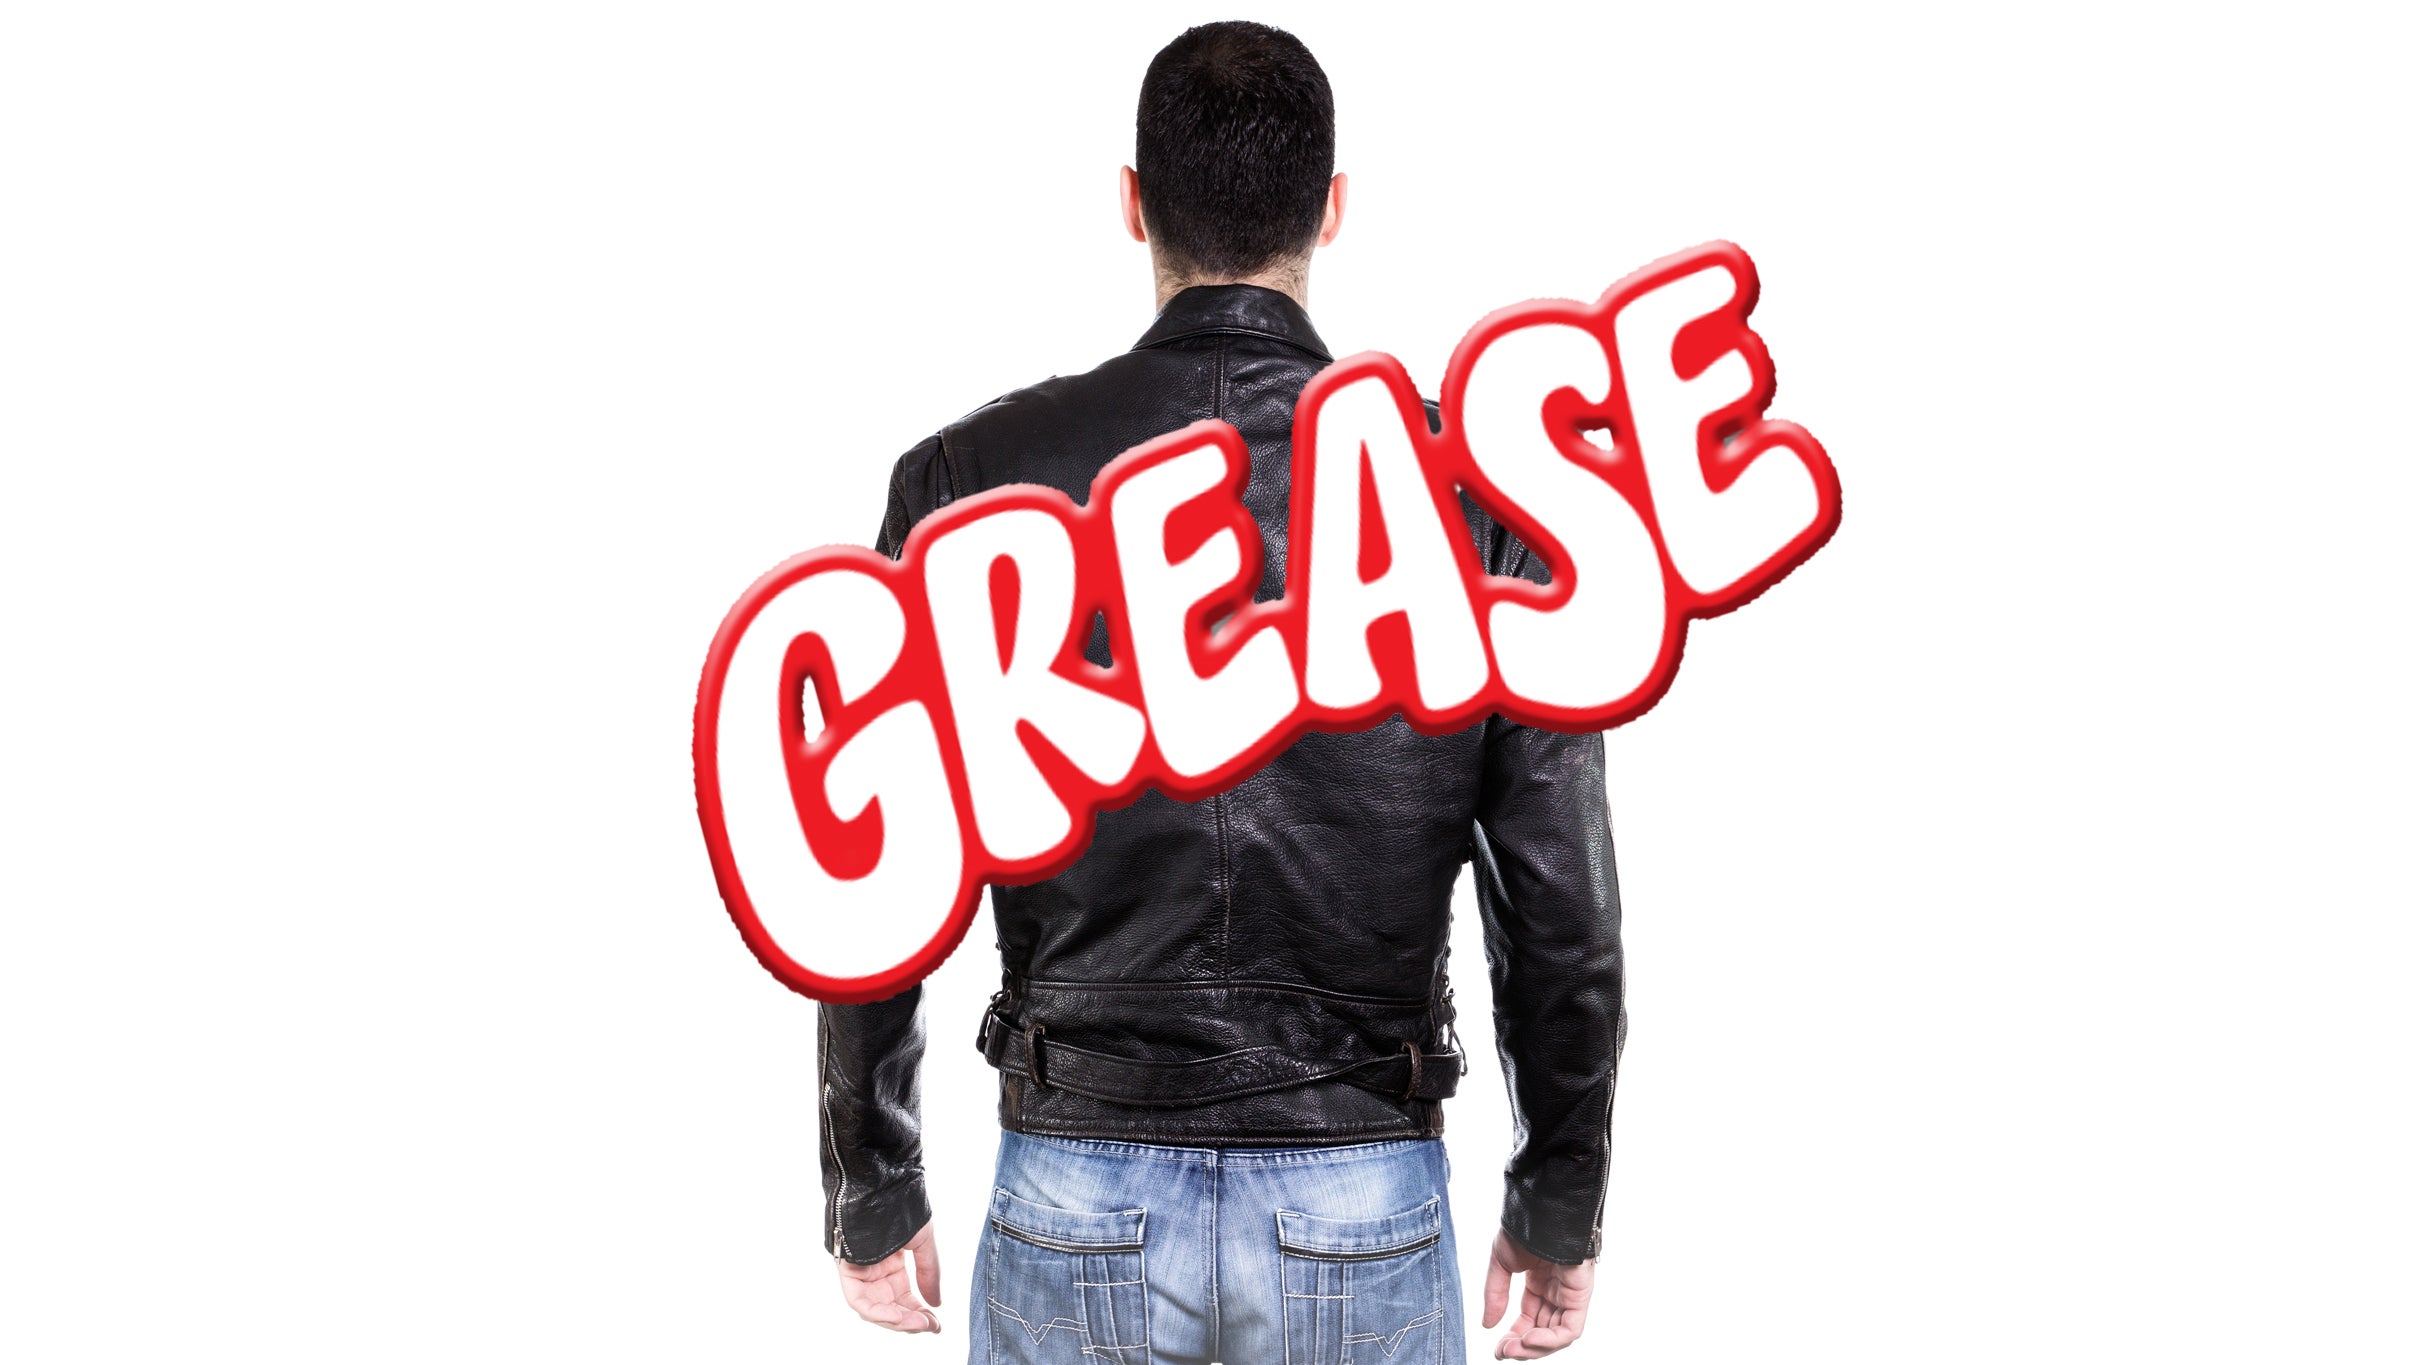 Hard Rock Presents: Grease in Atlantic City promo photo for Hard Rock presale offer code